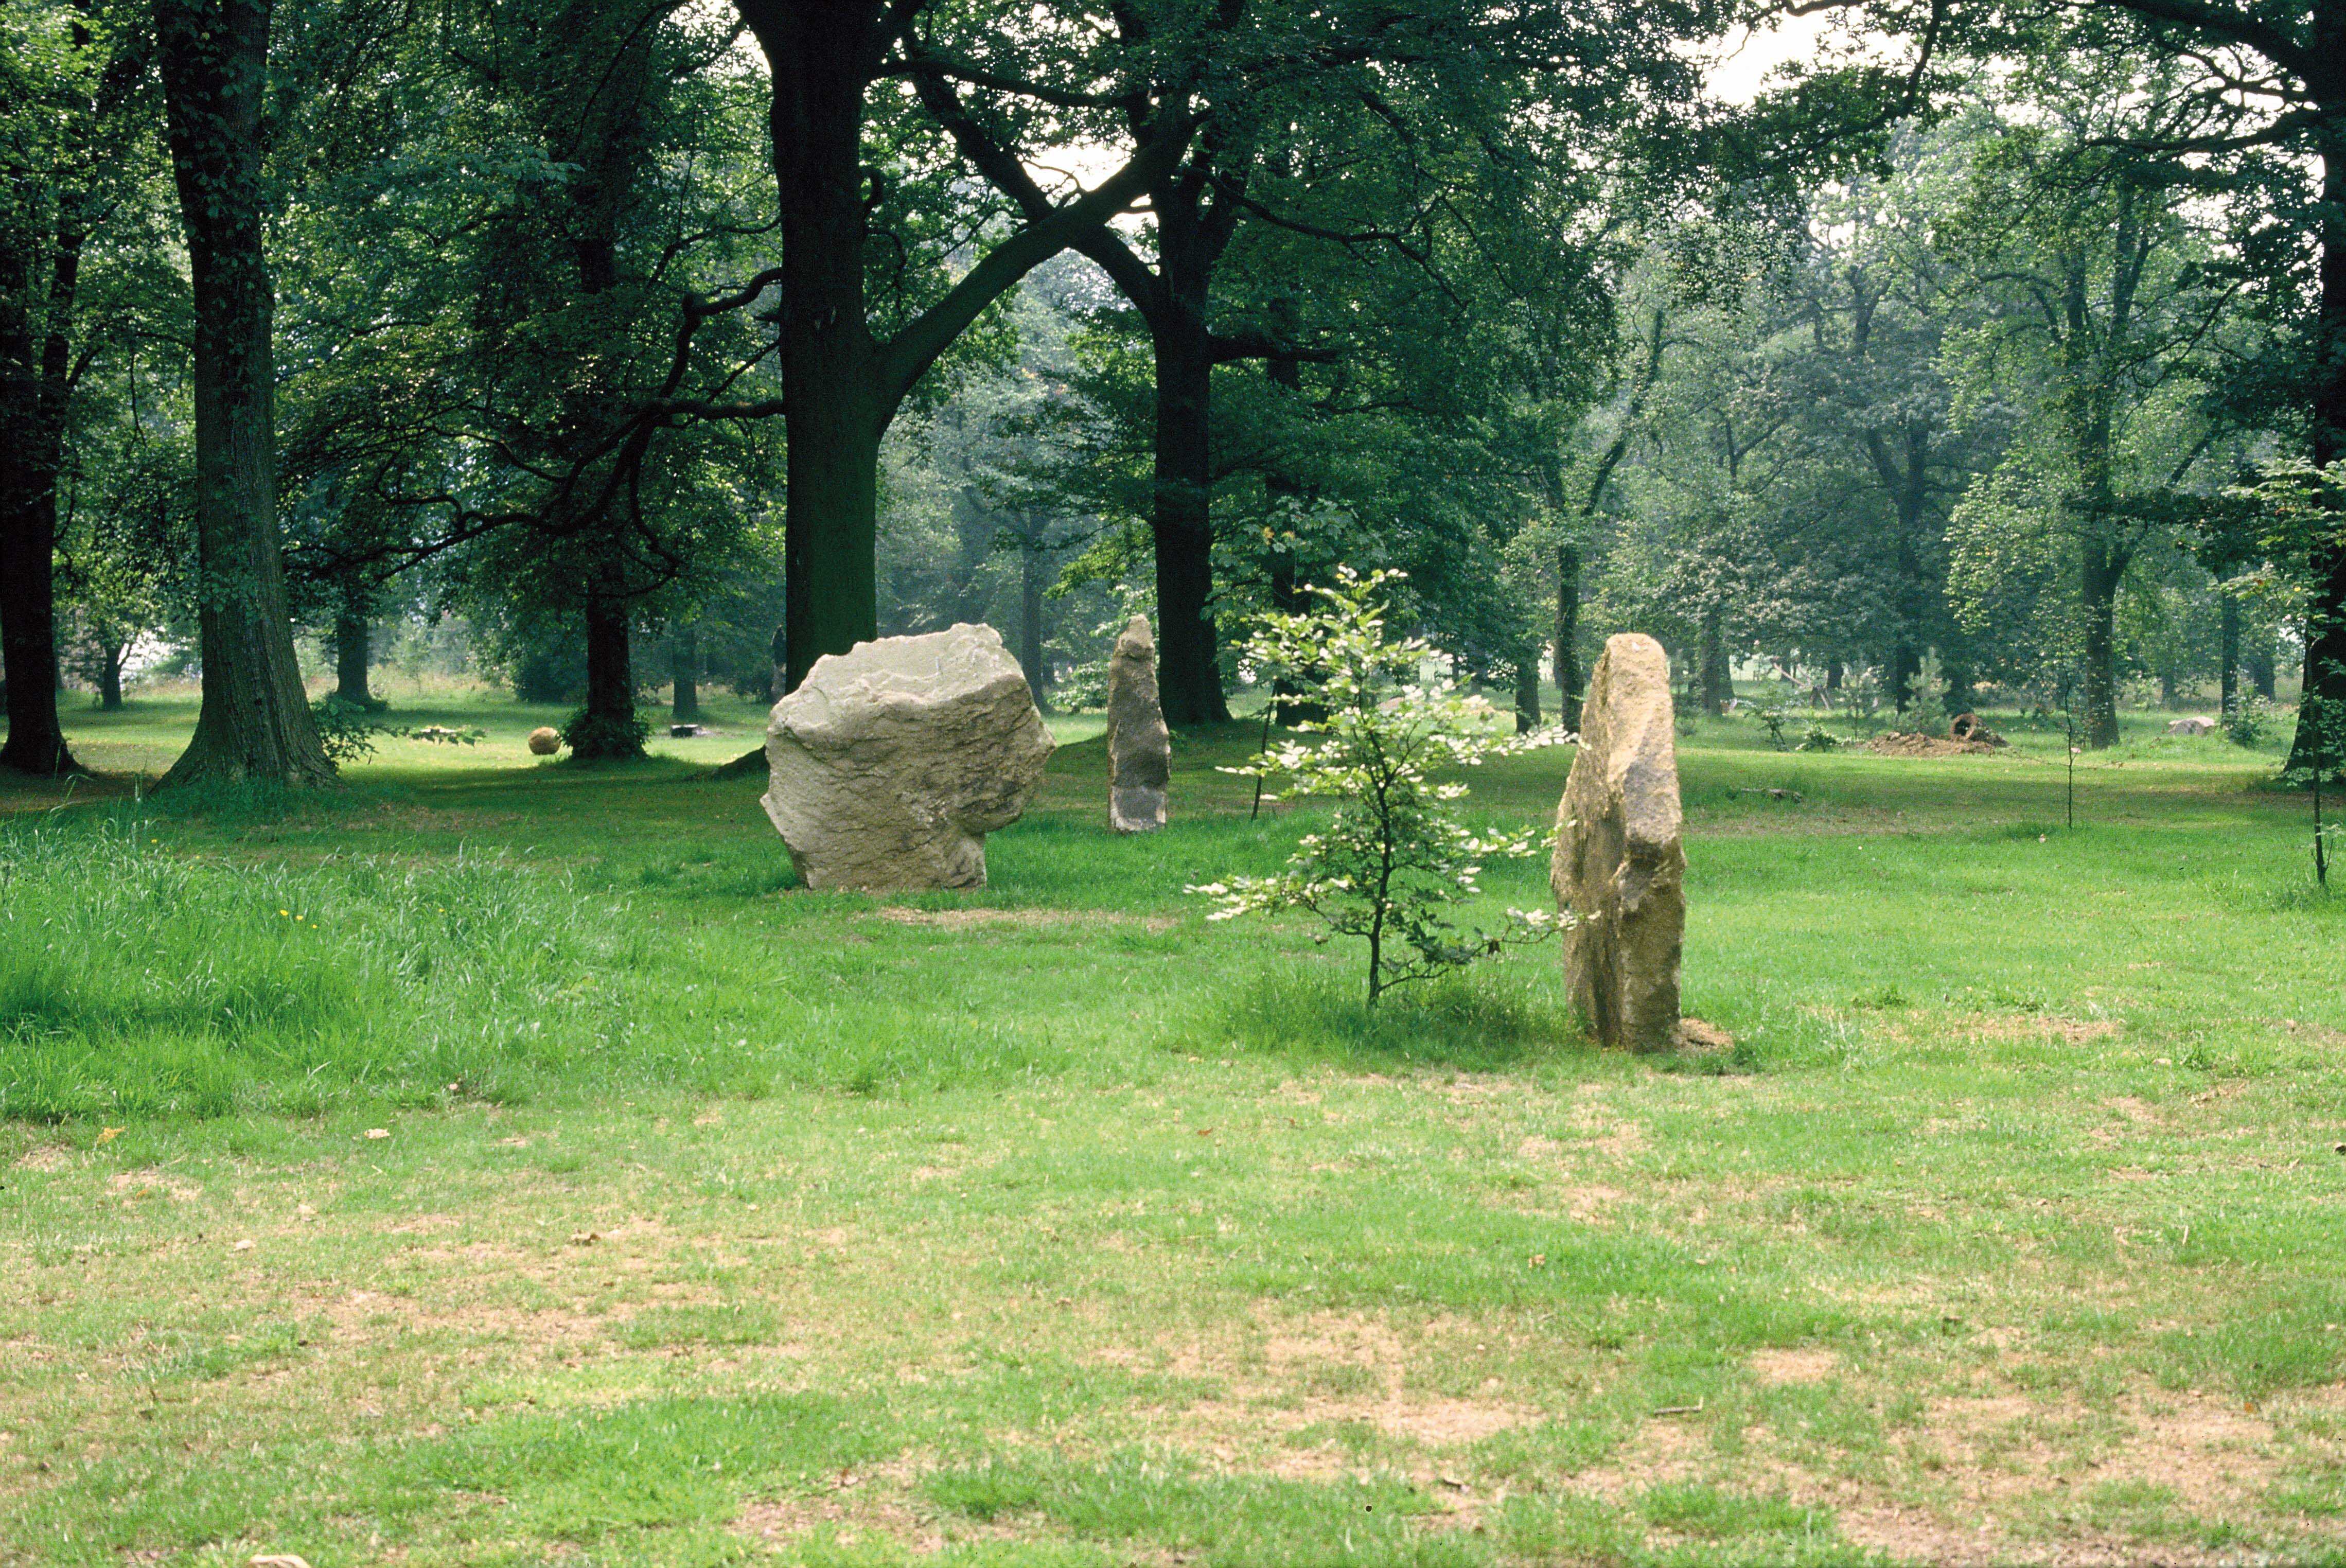 Three small trees growing next to three large stones